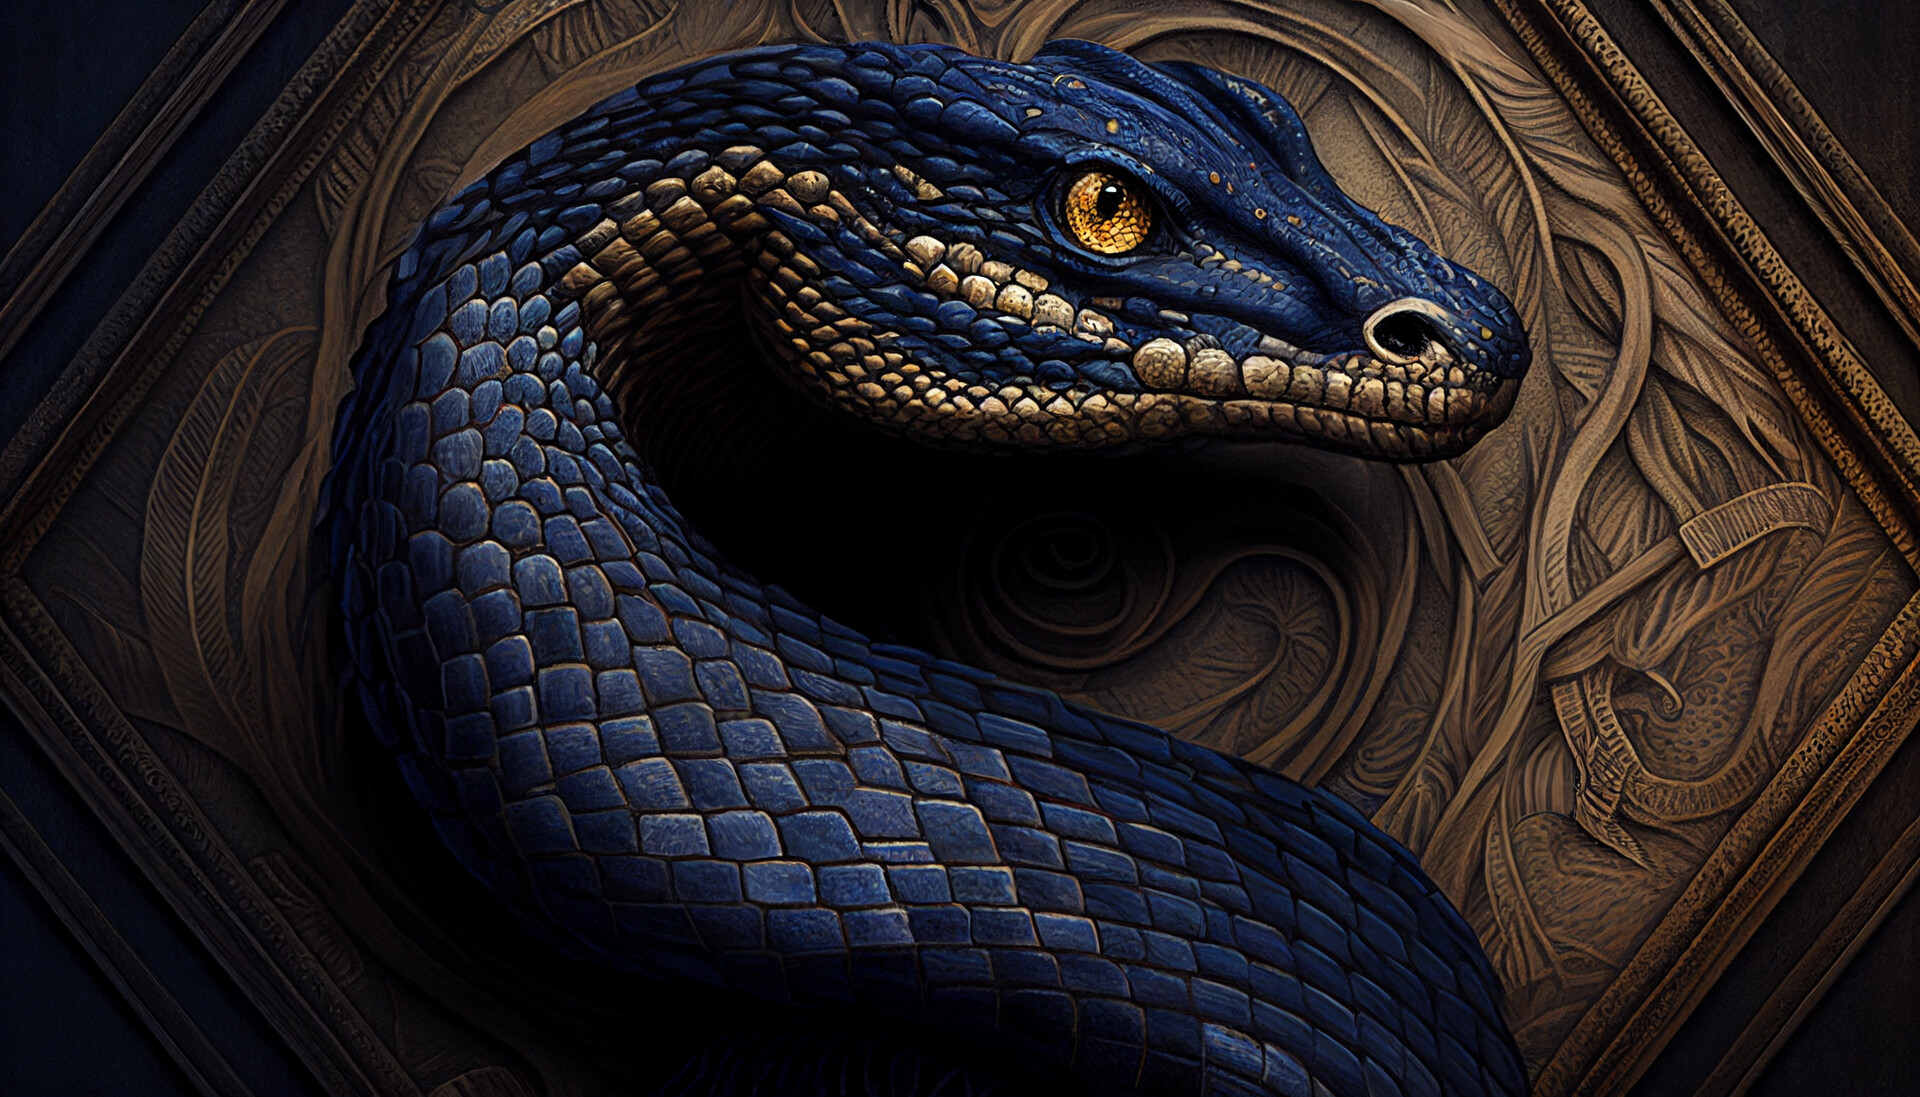 HD wallpaper blue snake  Wallpaper Flare